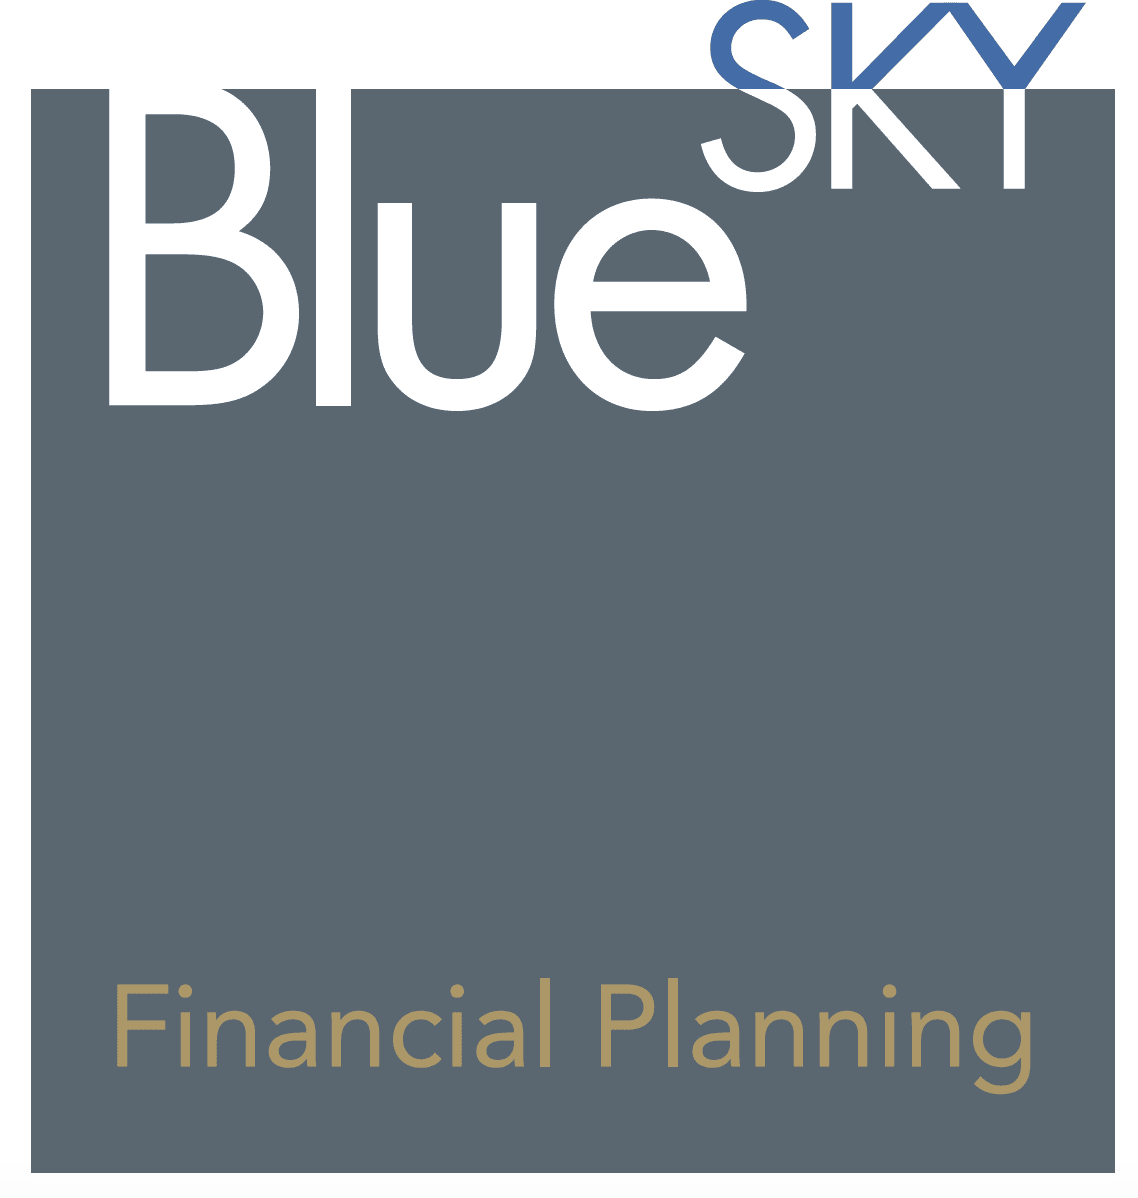 Blue Sky Financial Planning Ltd